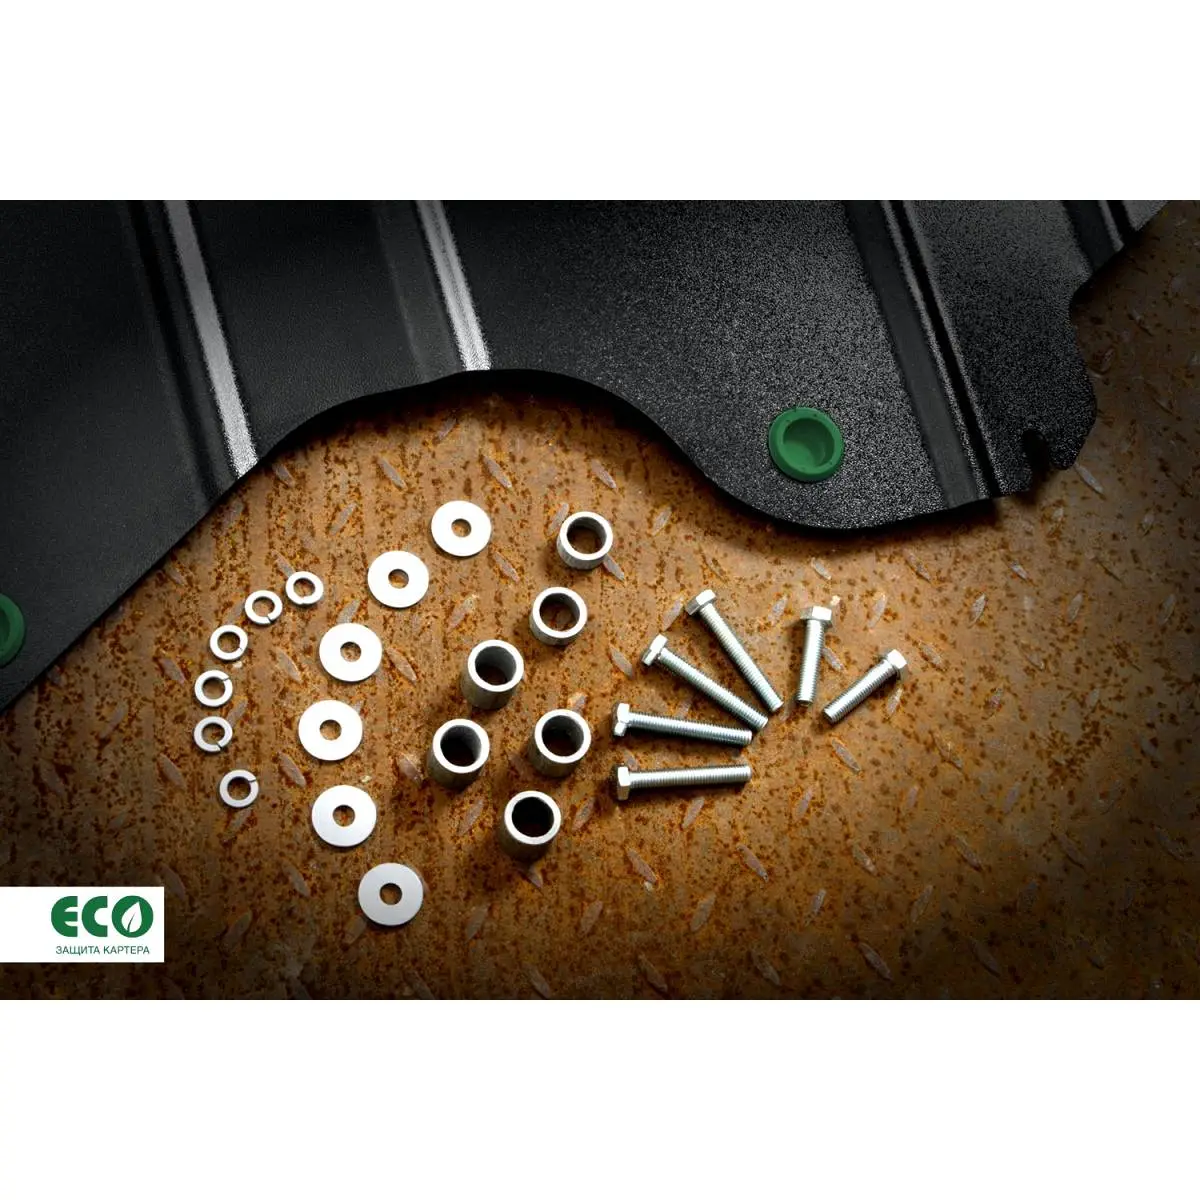 Комплект защиты картера и крепеж Eco 1437099105 5O6 9E eco2036020 XQ5OLR изображение 2